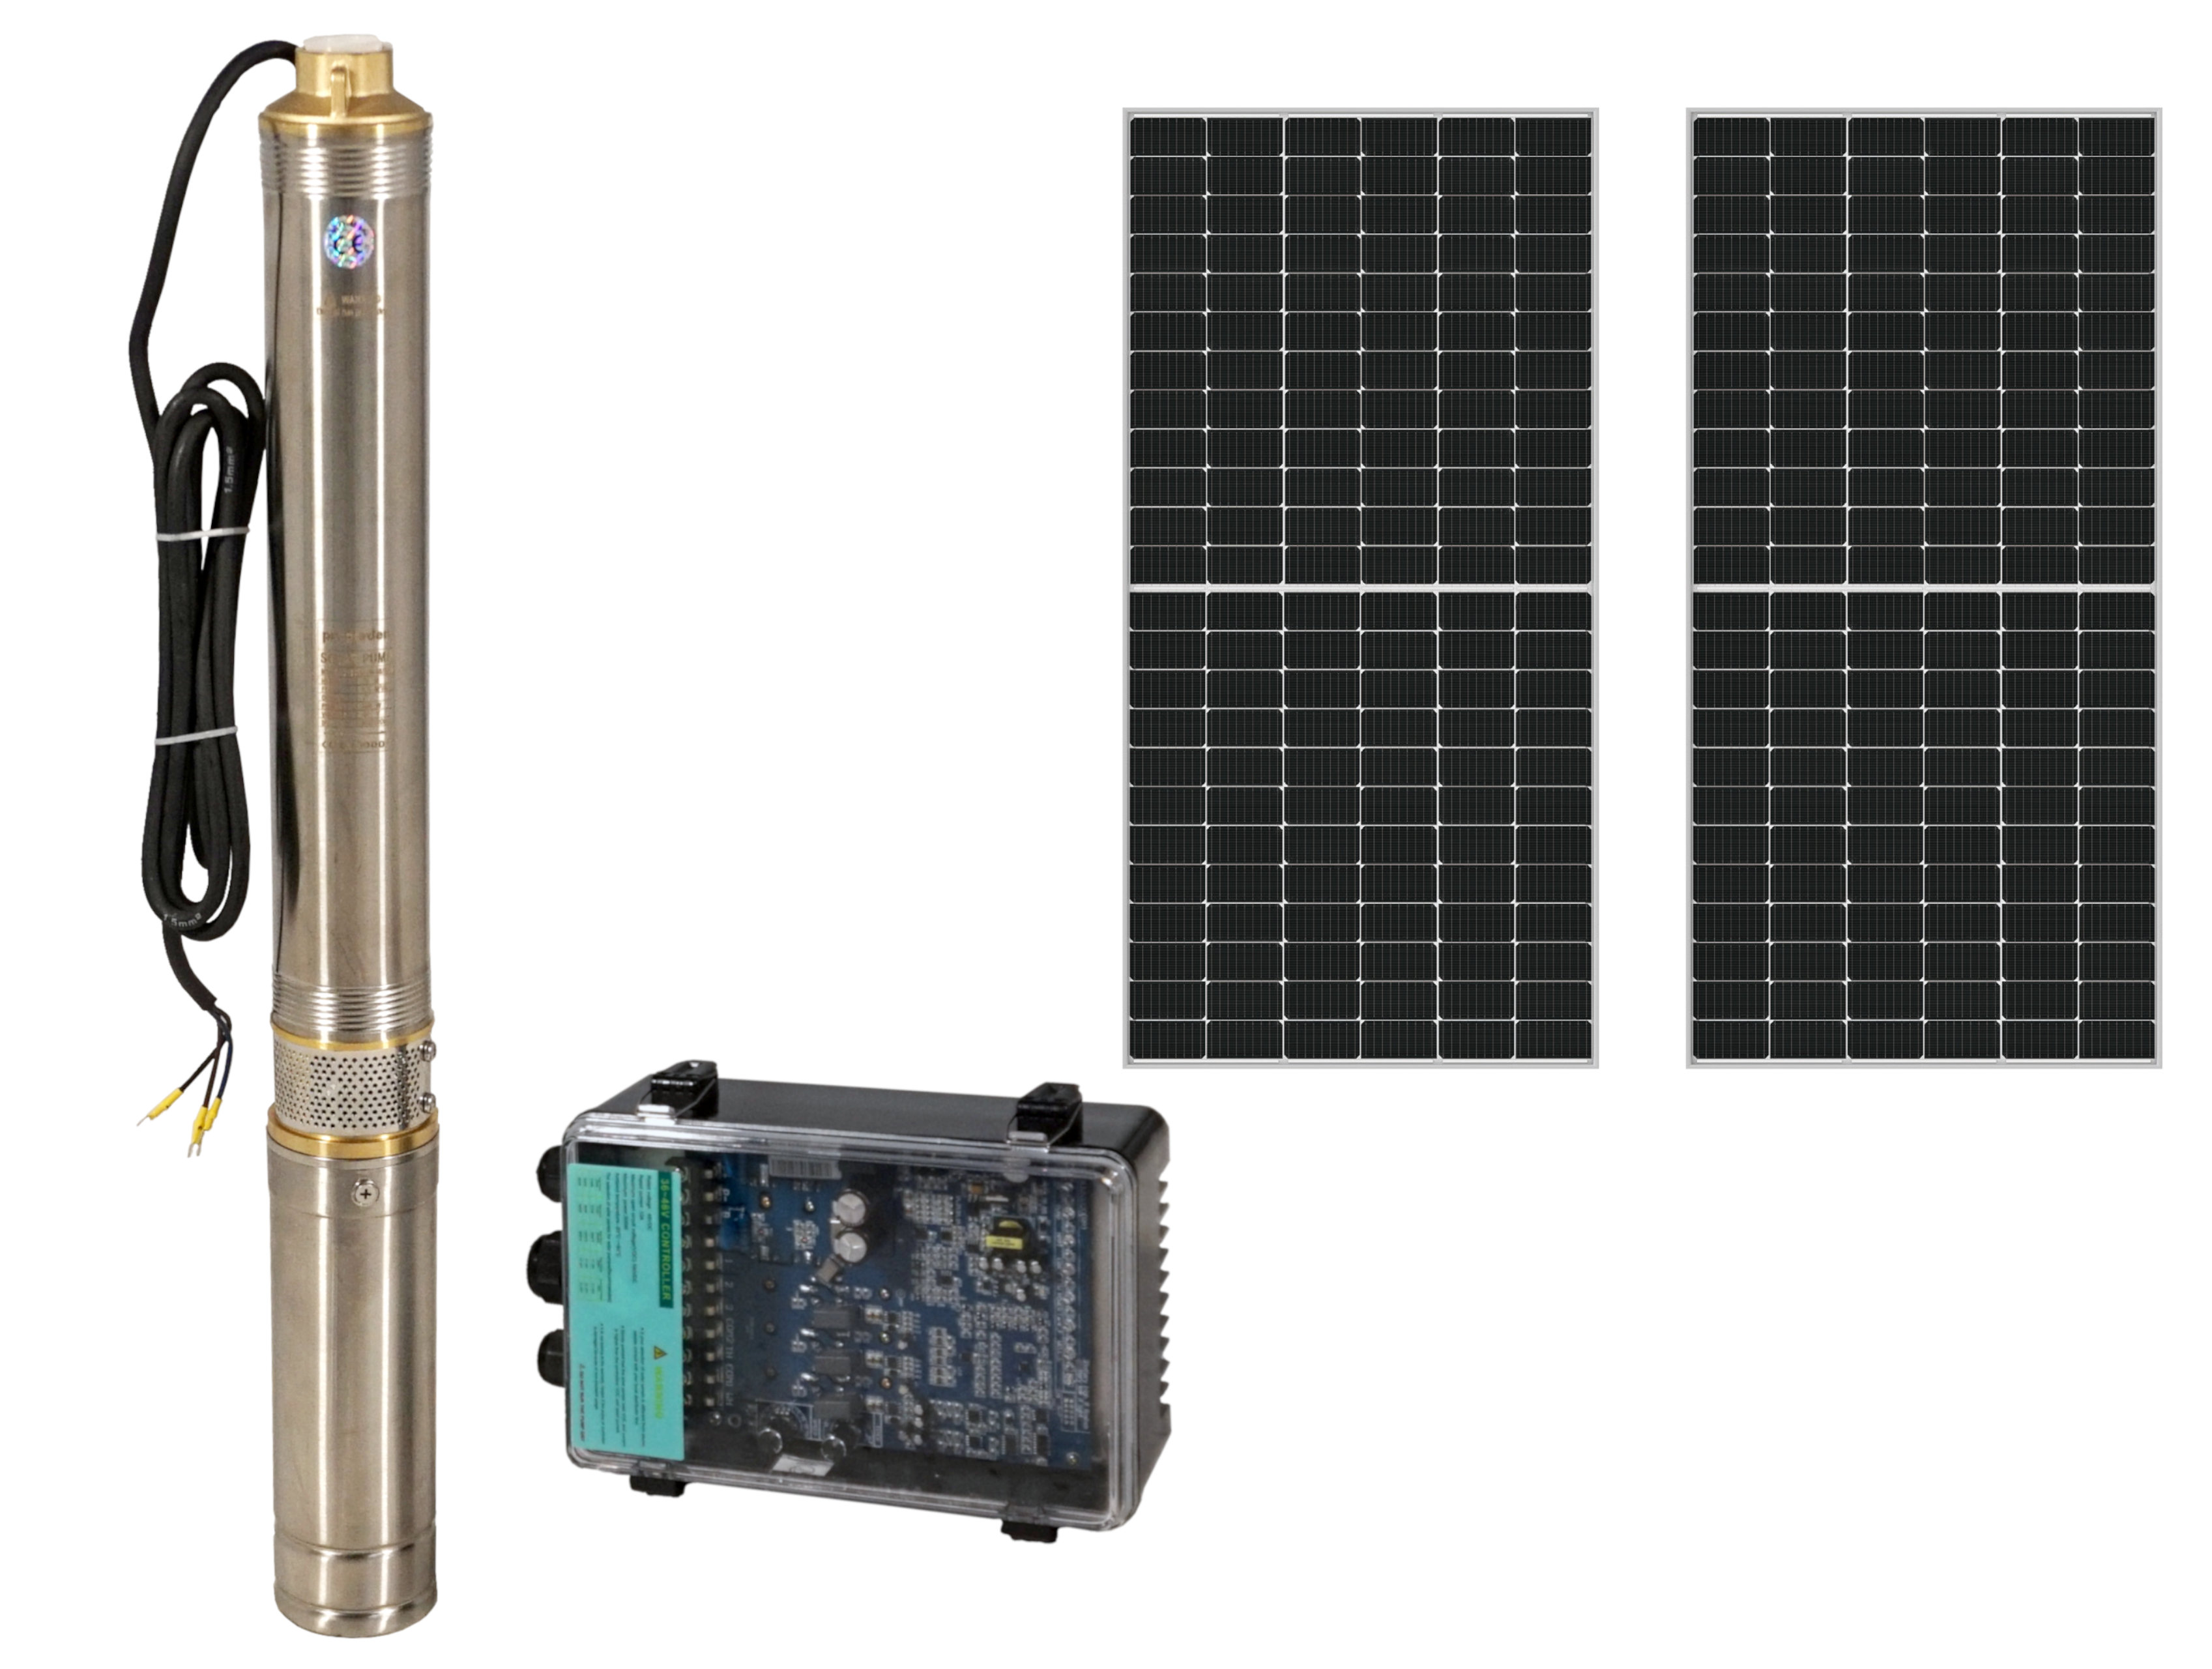 Progarden Pachet 3TSC3.5-50-48/500 Pompa submersibila 1", solar, 500W/48V, MPPT, 50m, 3.5mch, multietajata, apa curata + 2 x SP460M-72H Panou fotovoltaic